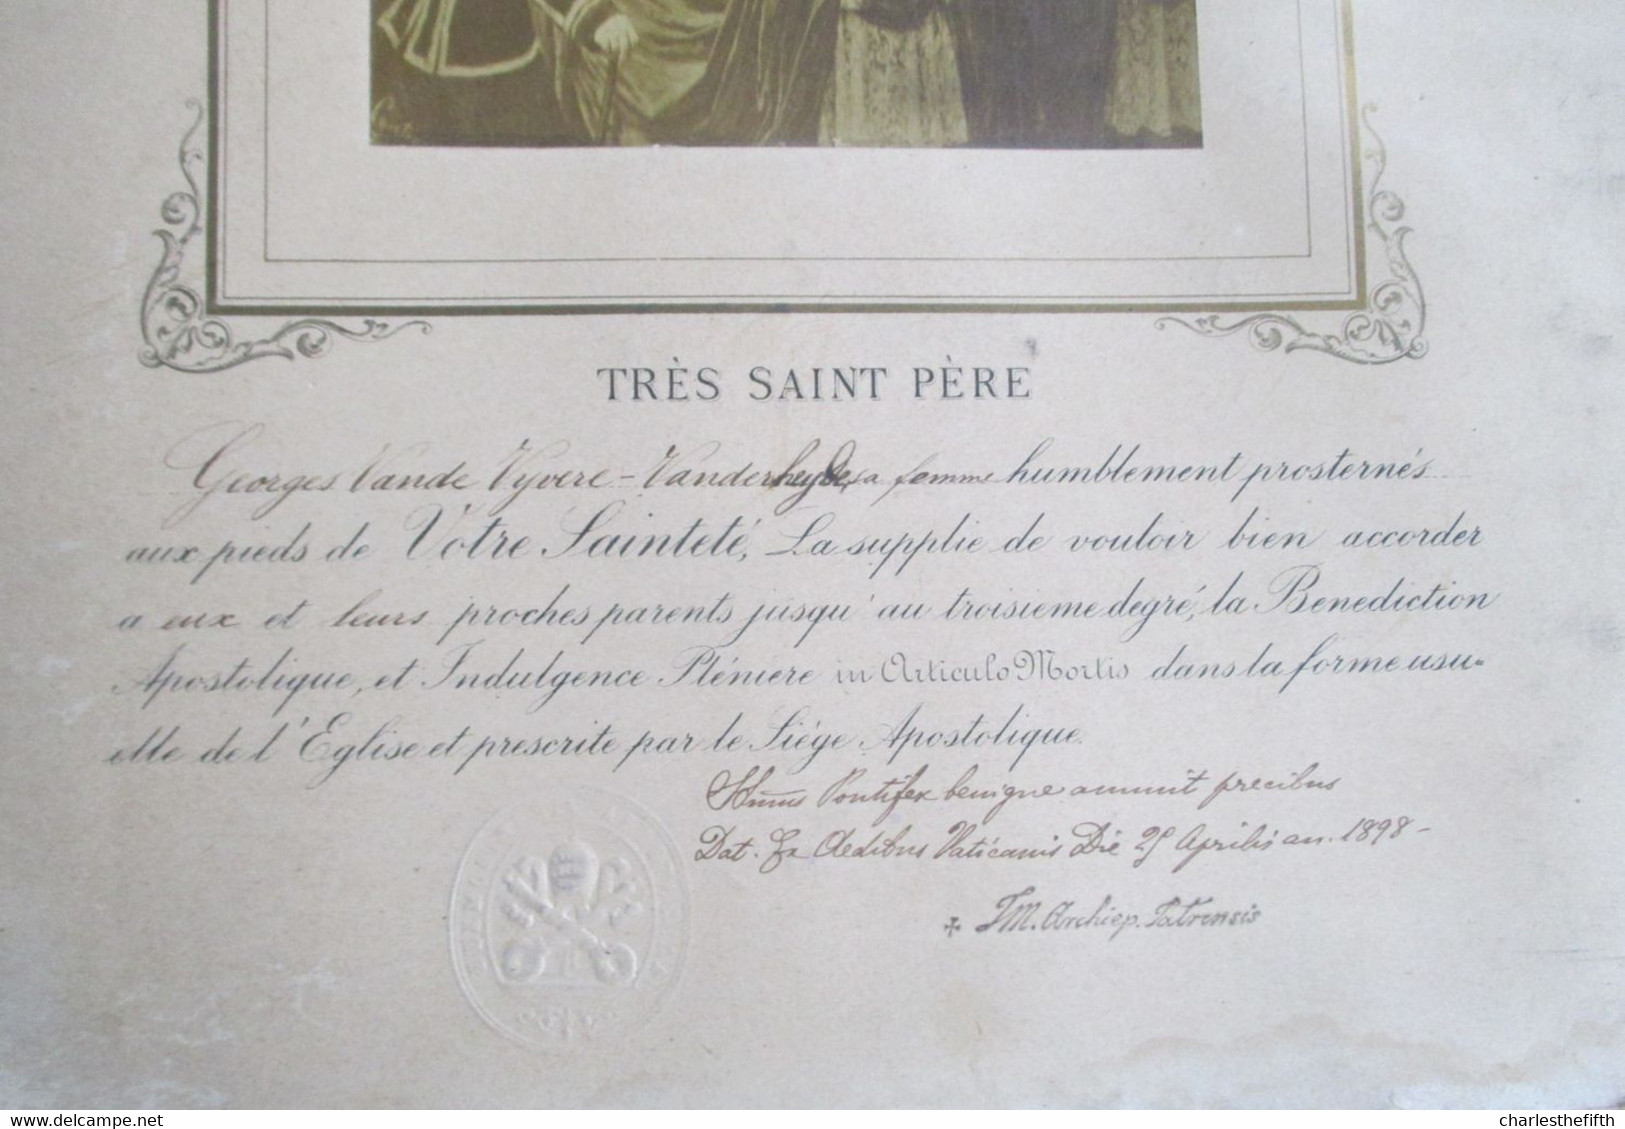 RARE BENEDICTION APOSTOLIQUE PAPE LEO XIII Année 1885 - PHOTO ALBUMINE SIGNEE - TAMPON SEC DU PAPE - à VANDE VYVERE - Old (before 1900)